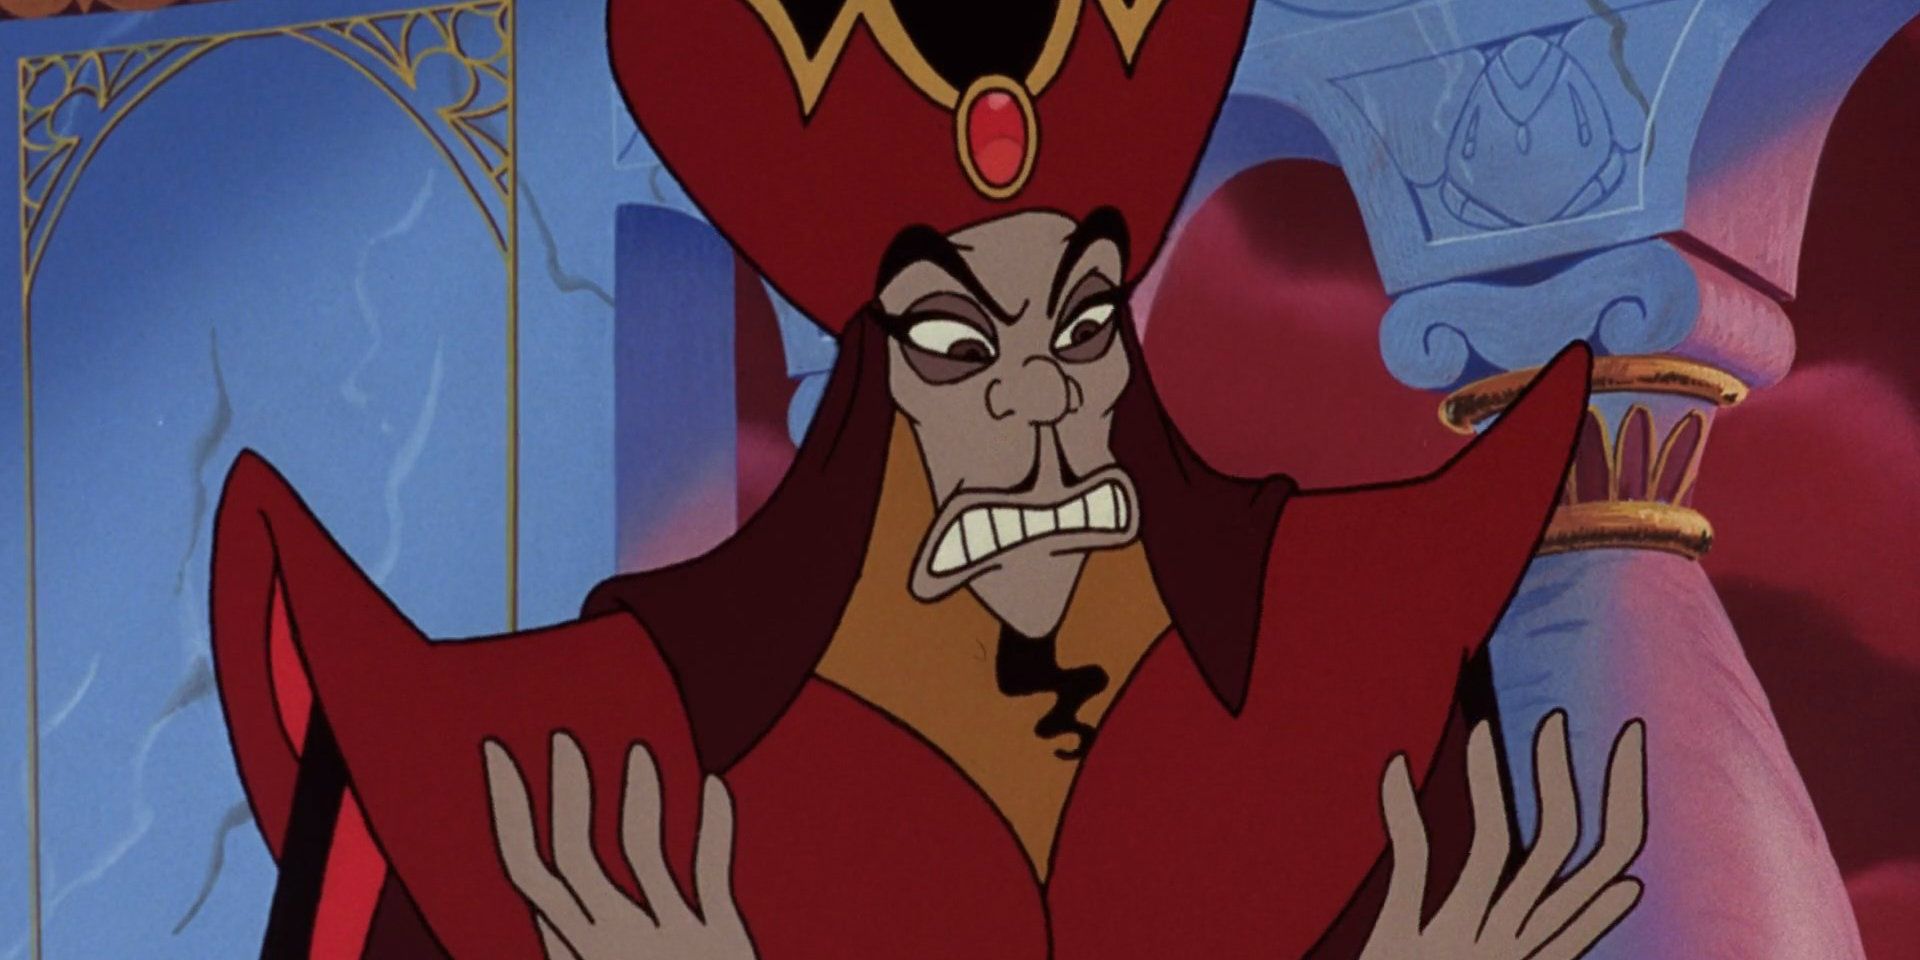 Jafar looking annoyed in The Return of Jafar.